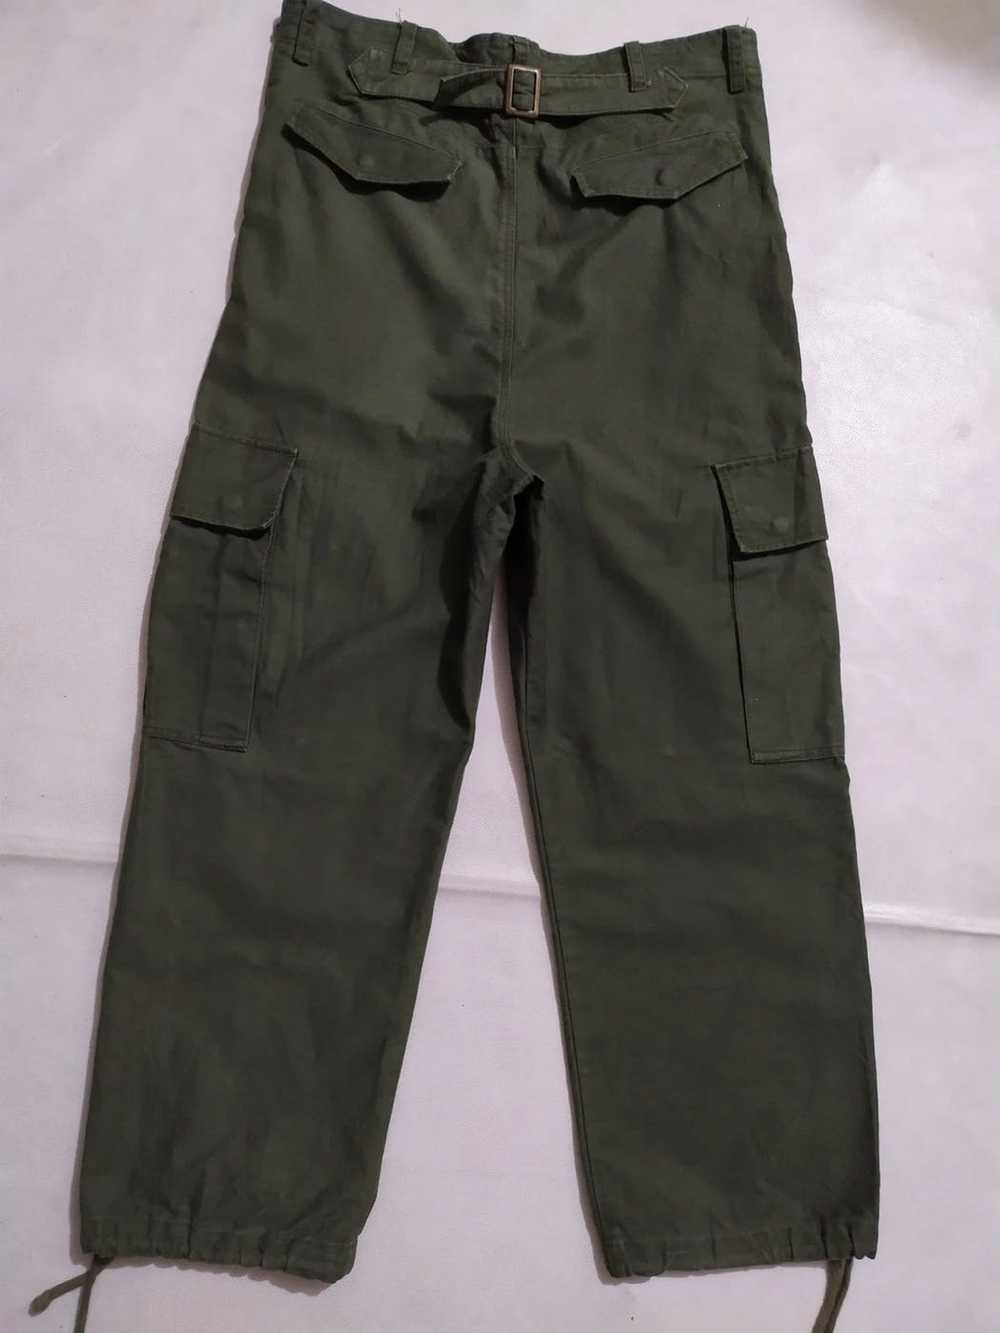 Japanese Brand Cargo Pants - image 6